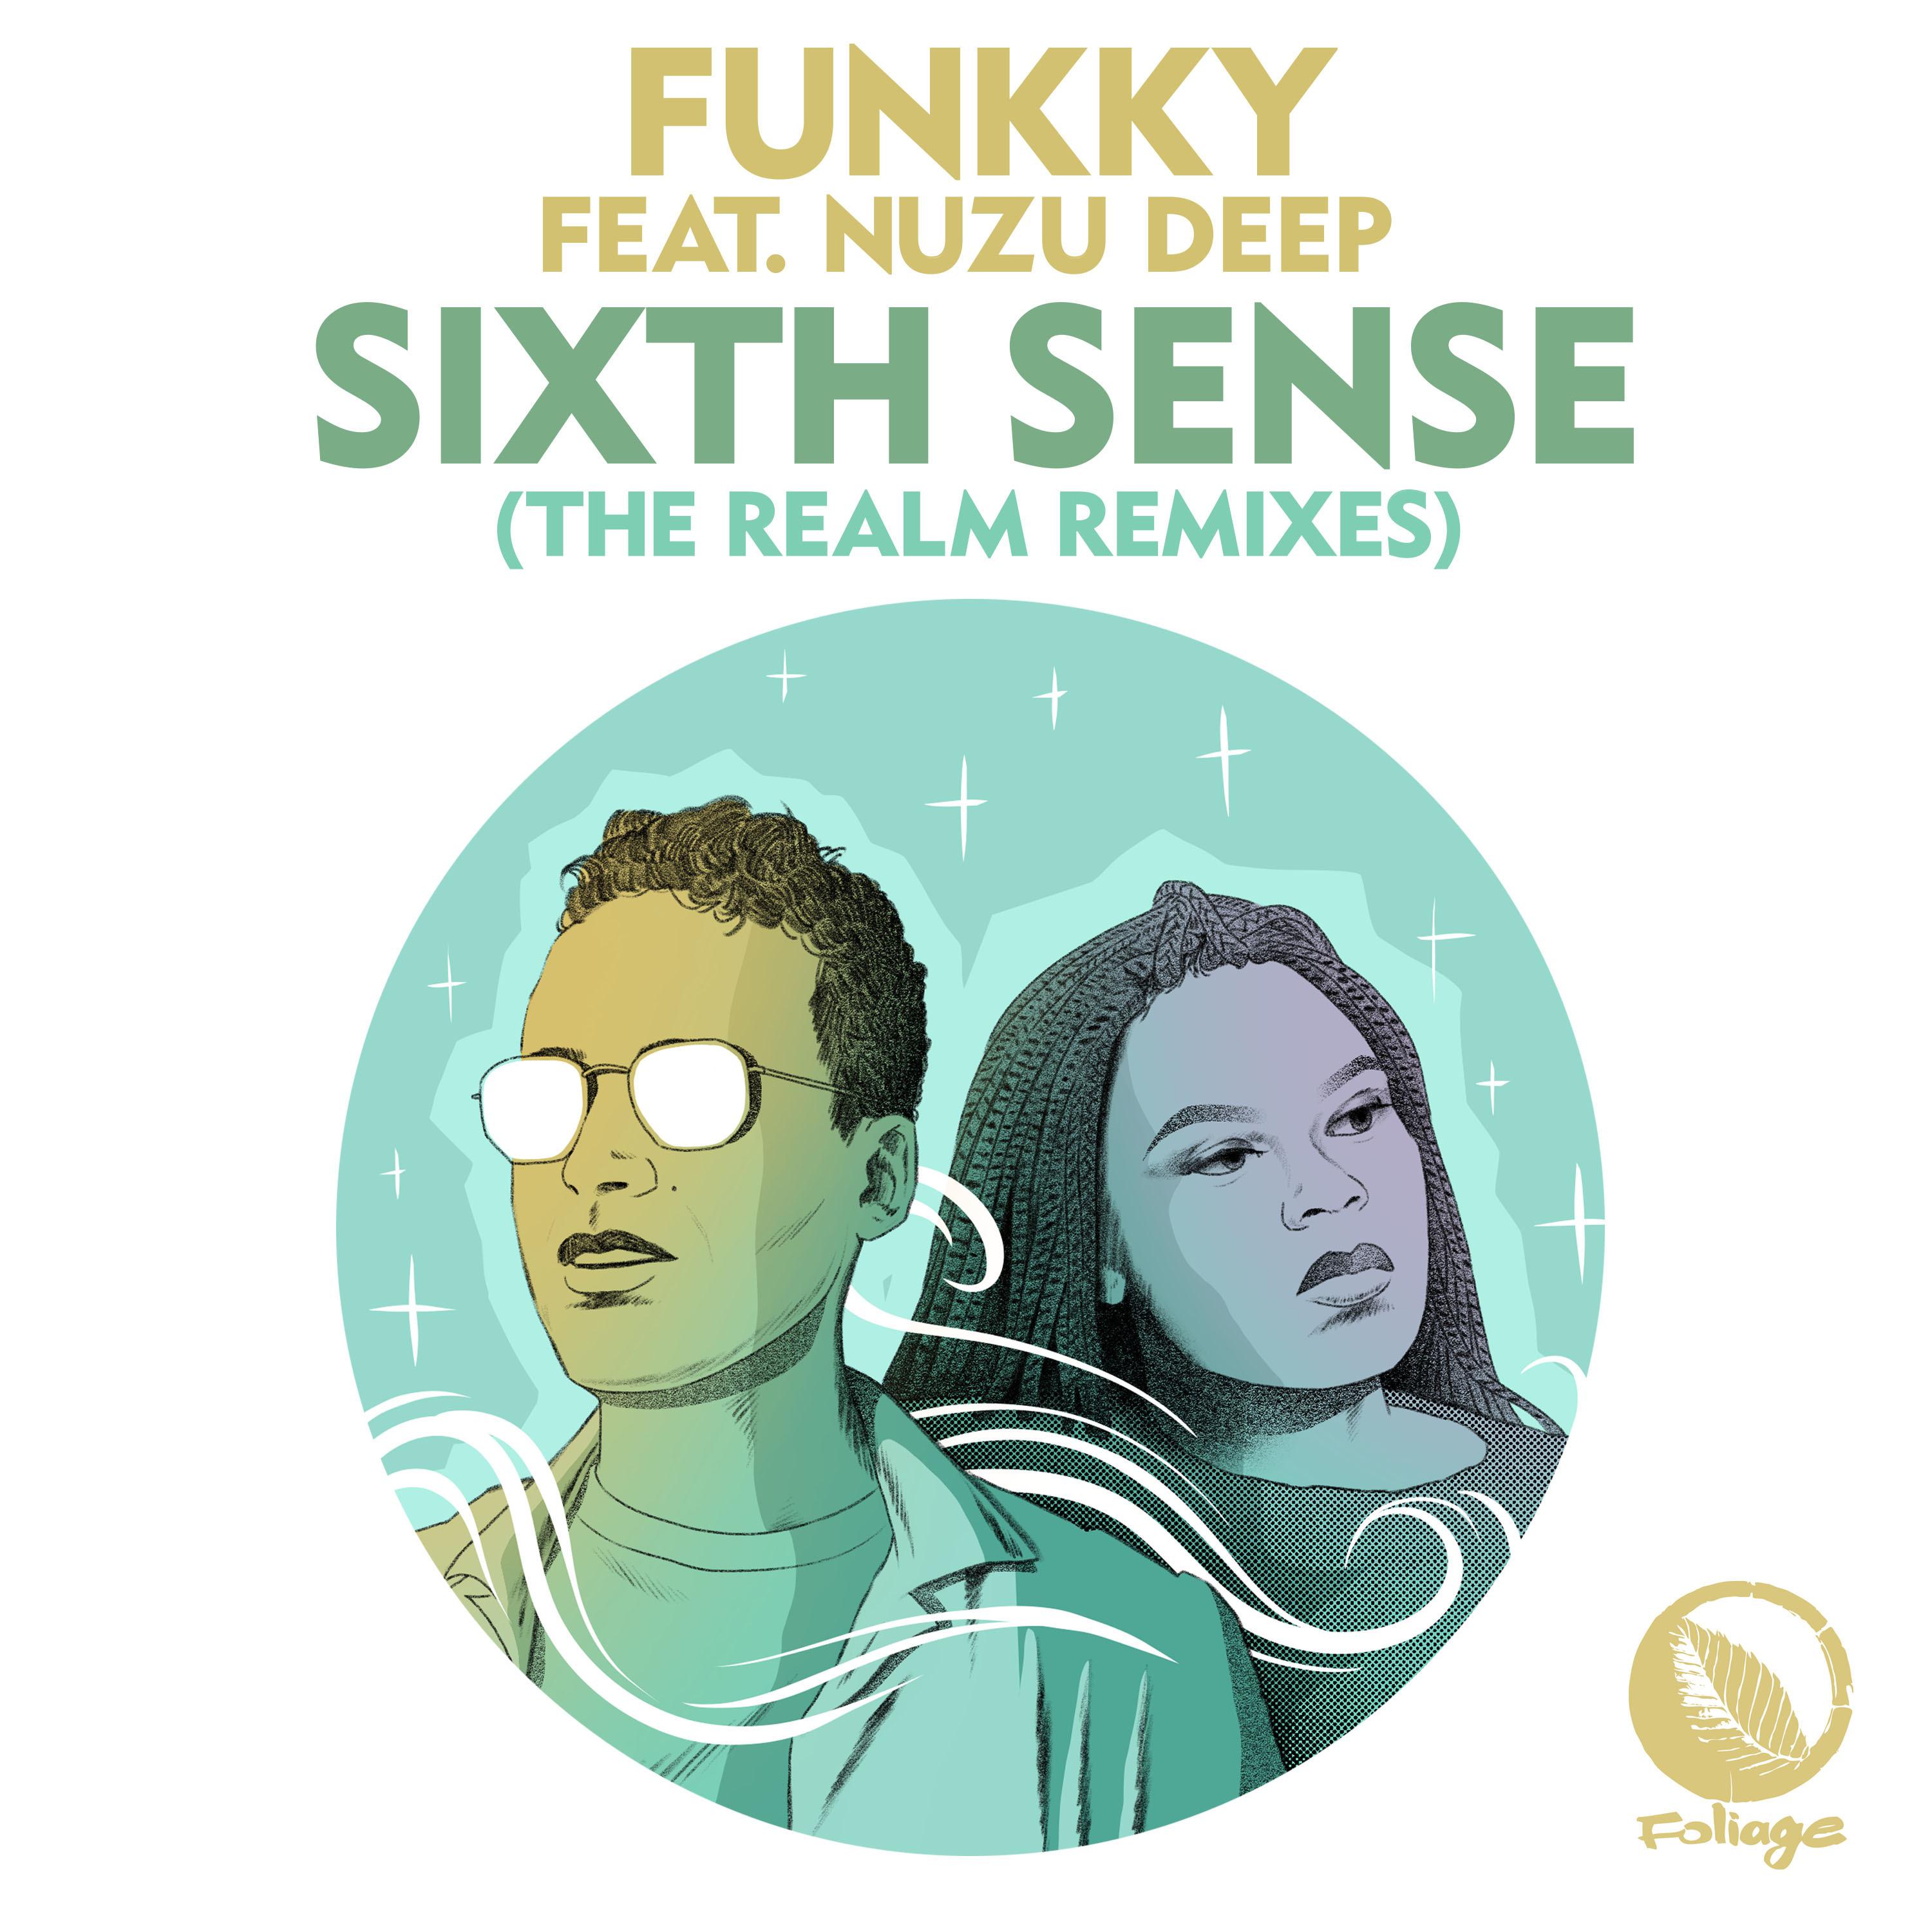 Funkky - Sixth Sense (The Realm Remix Edit)